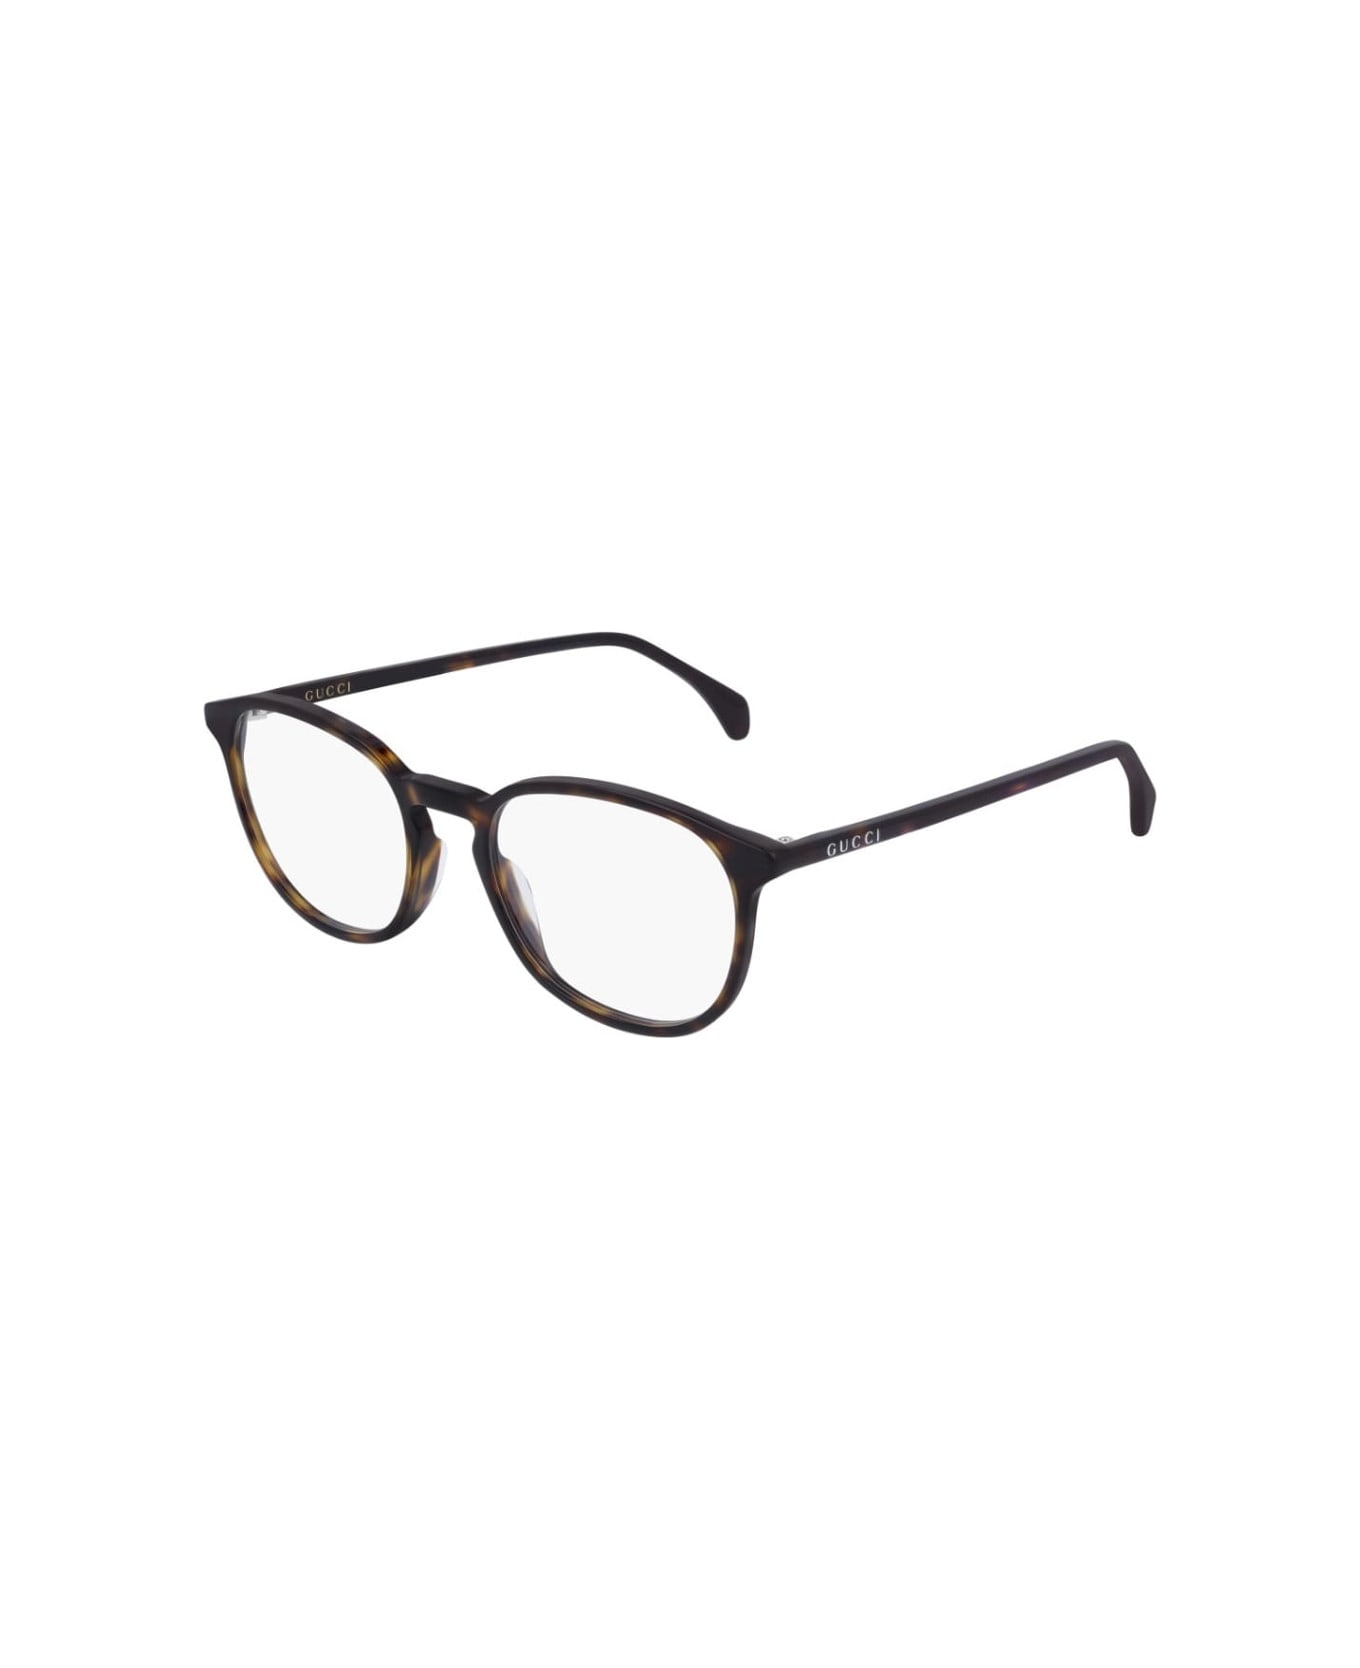 Gucci Eyewear GG0551 002 Glasses - Tartarugato